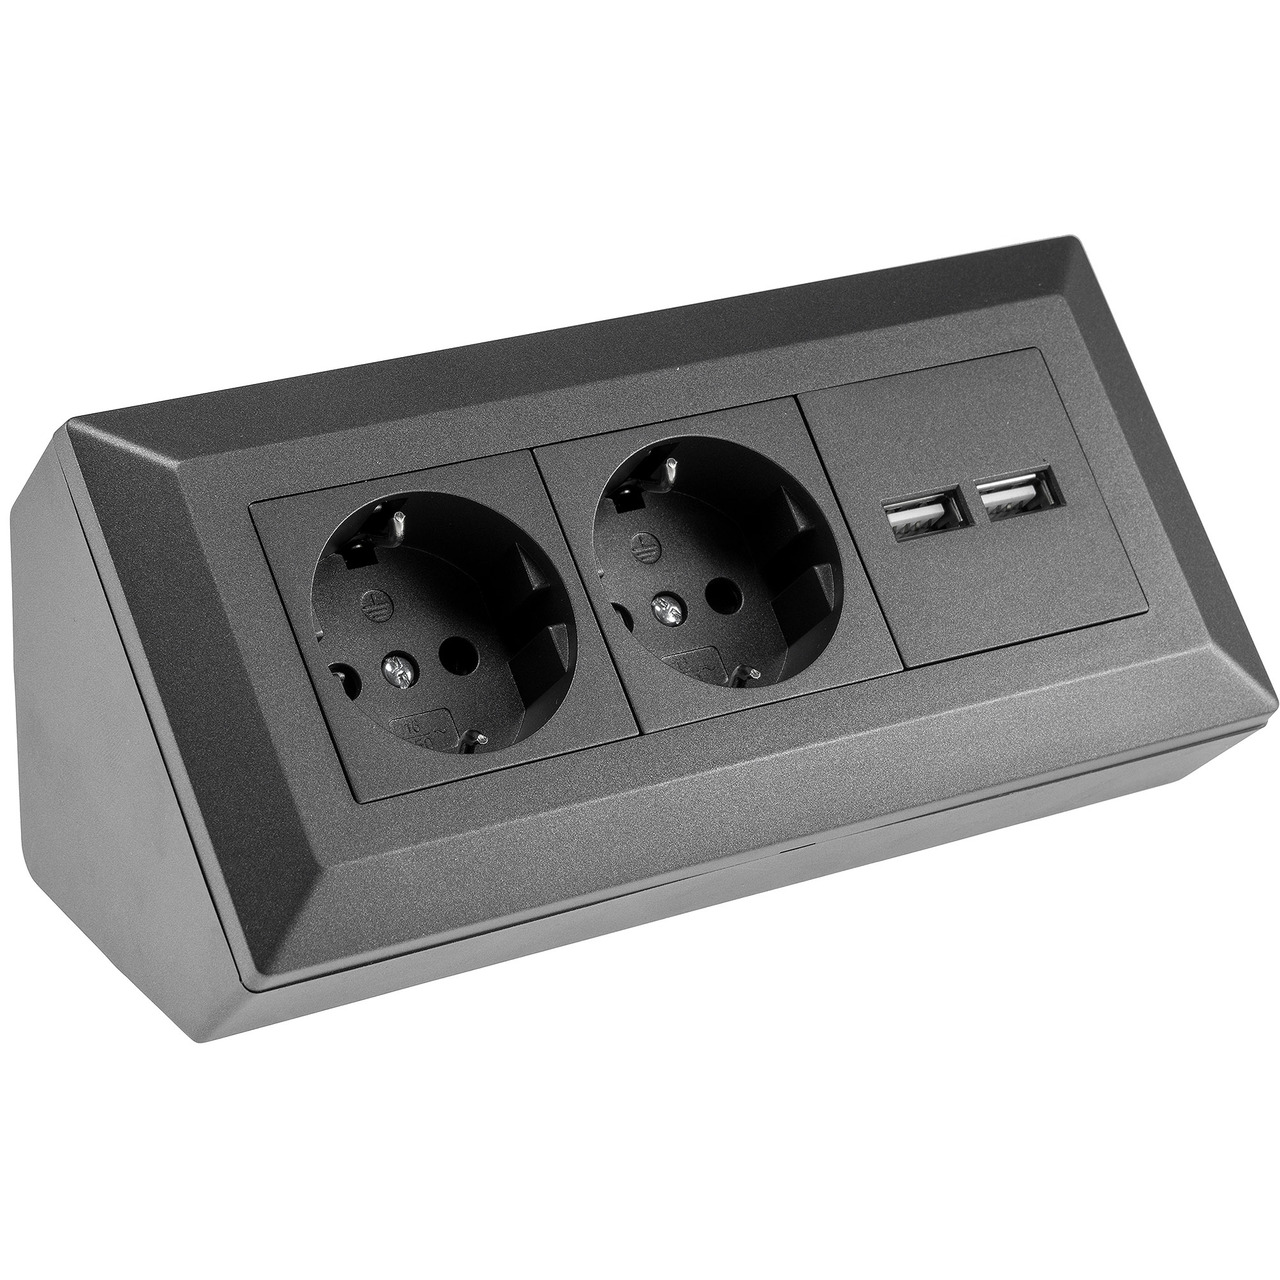 Chilitec 2-fach Steckdosenblock +2x USB 3-1A- max- 3600 W- Aufbaumontage- anthrazit unter Haustechnik